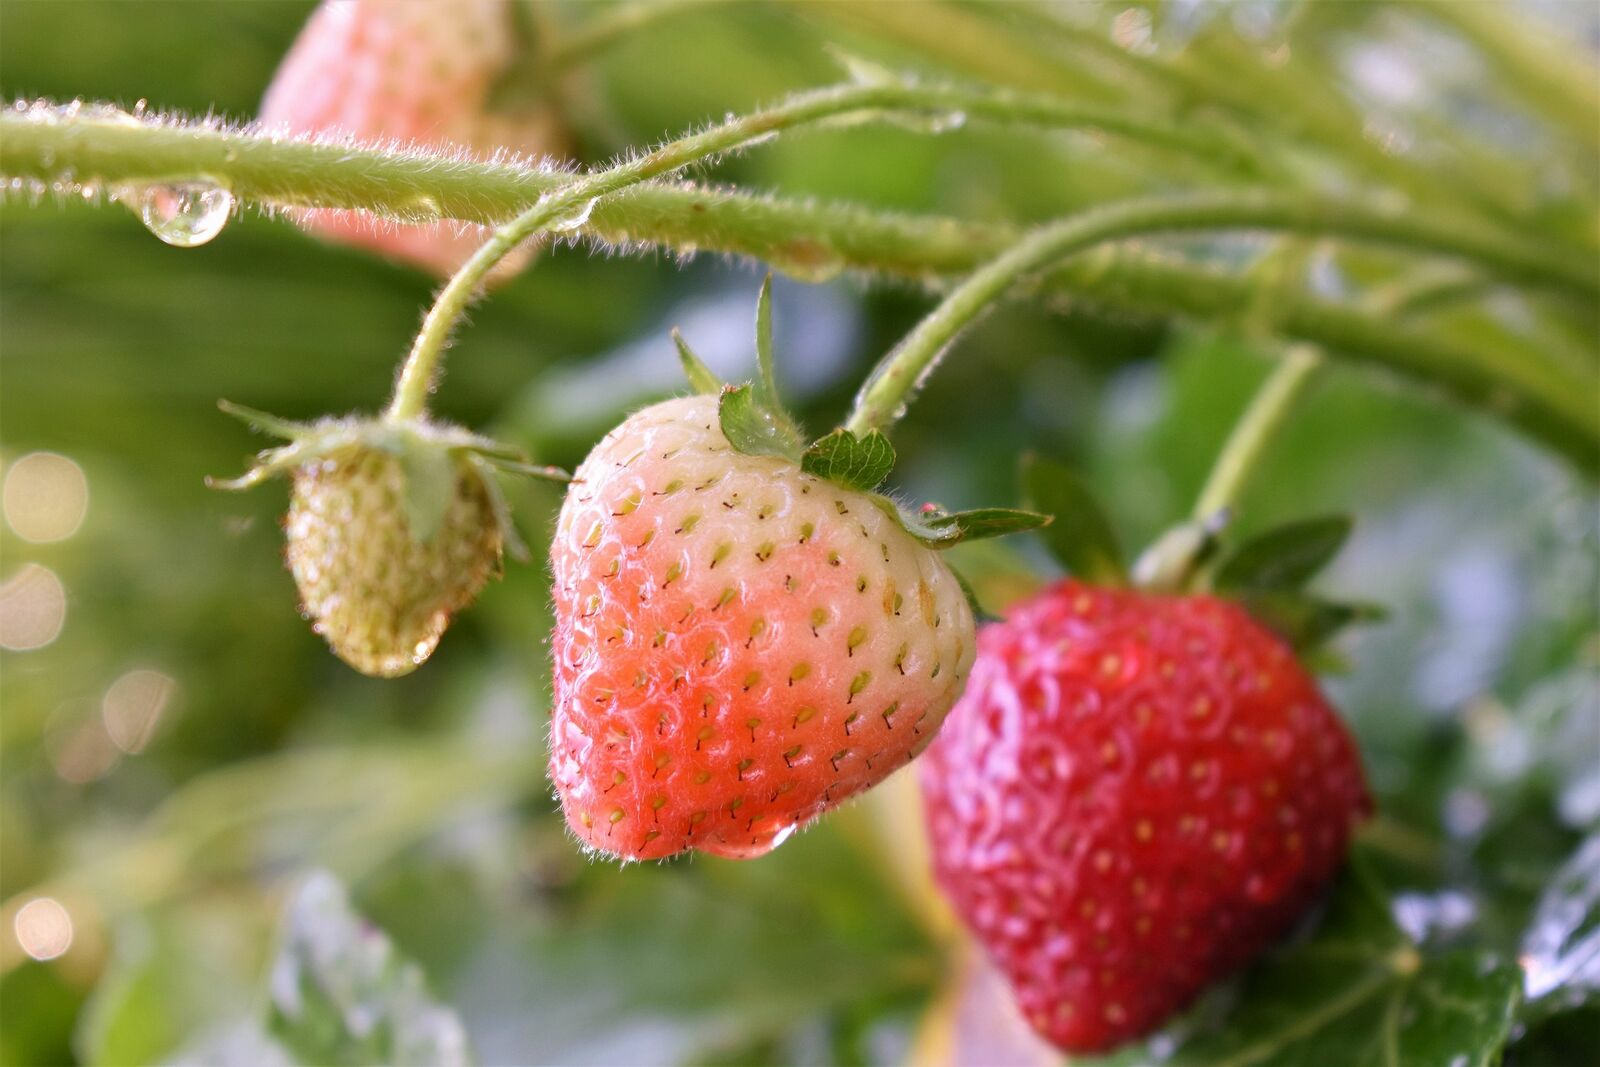 Fertilizing strawberries: Home remedies & natural fertilizers at a glance